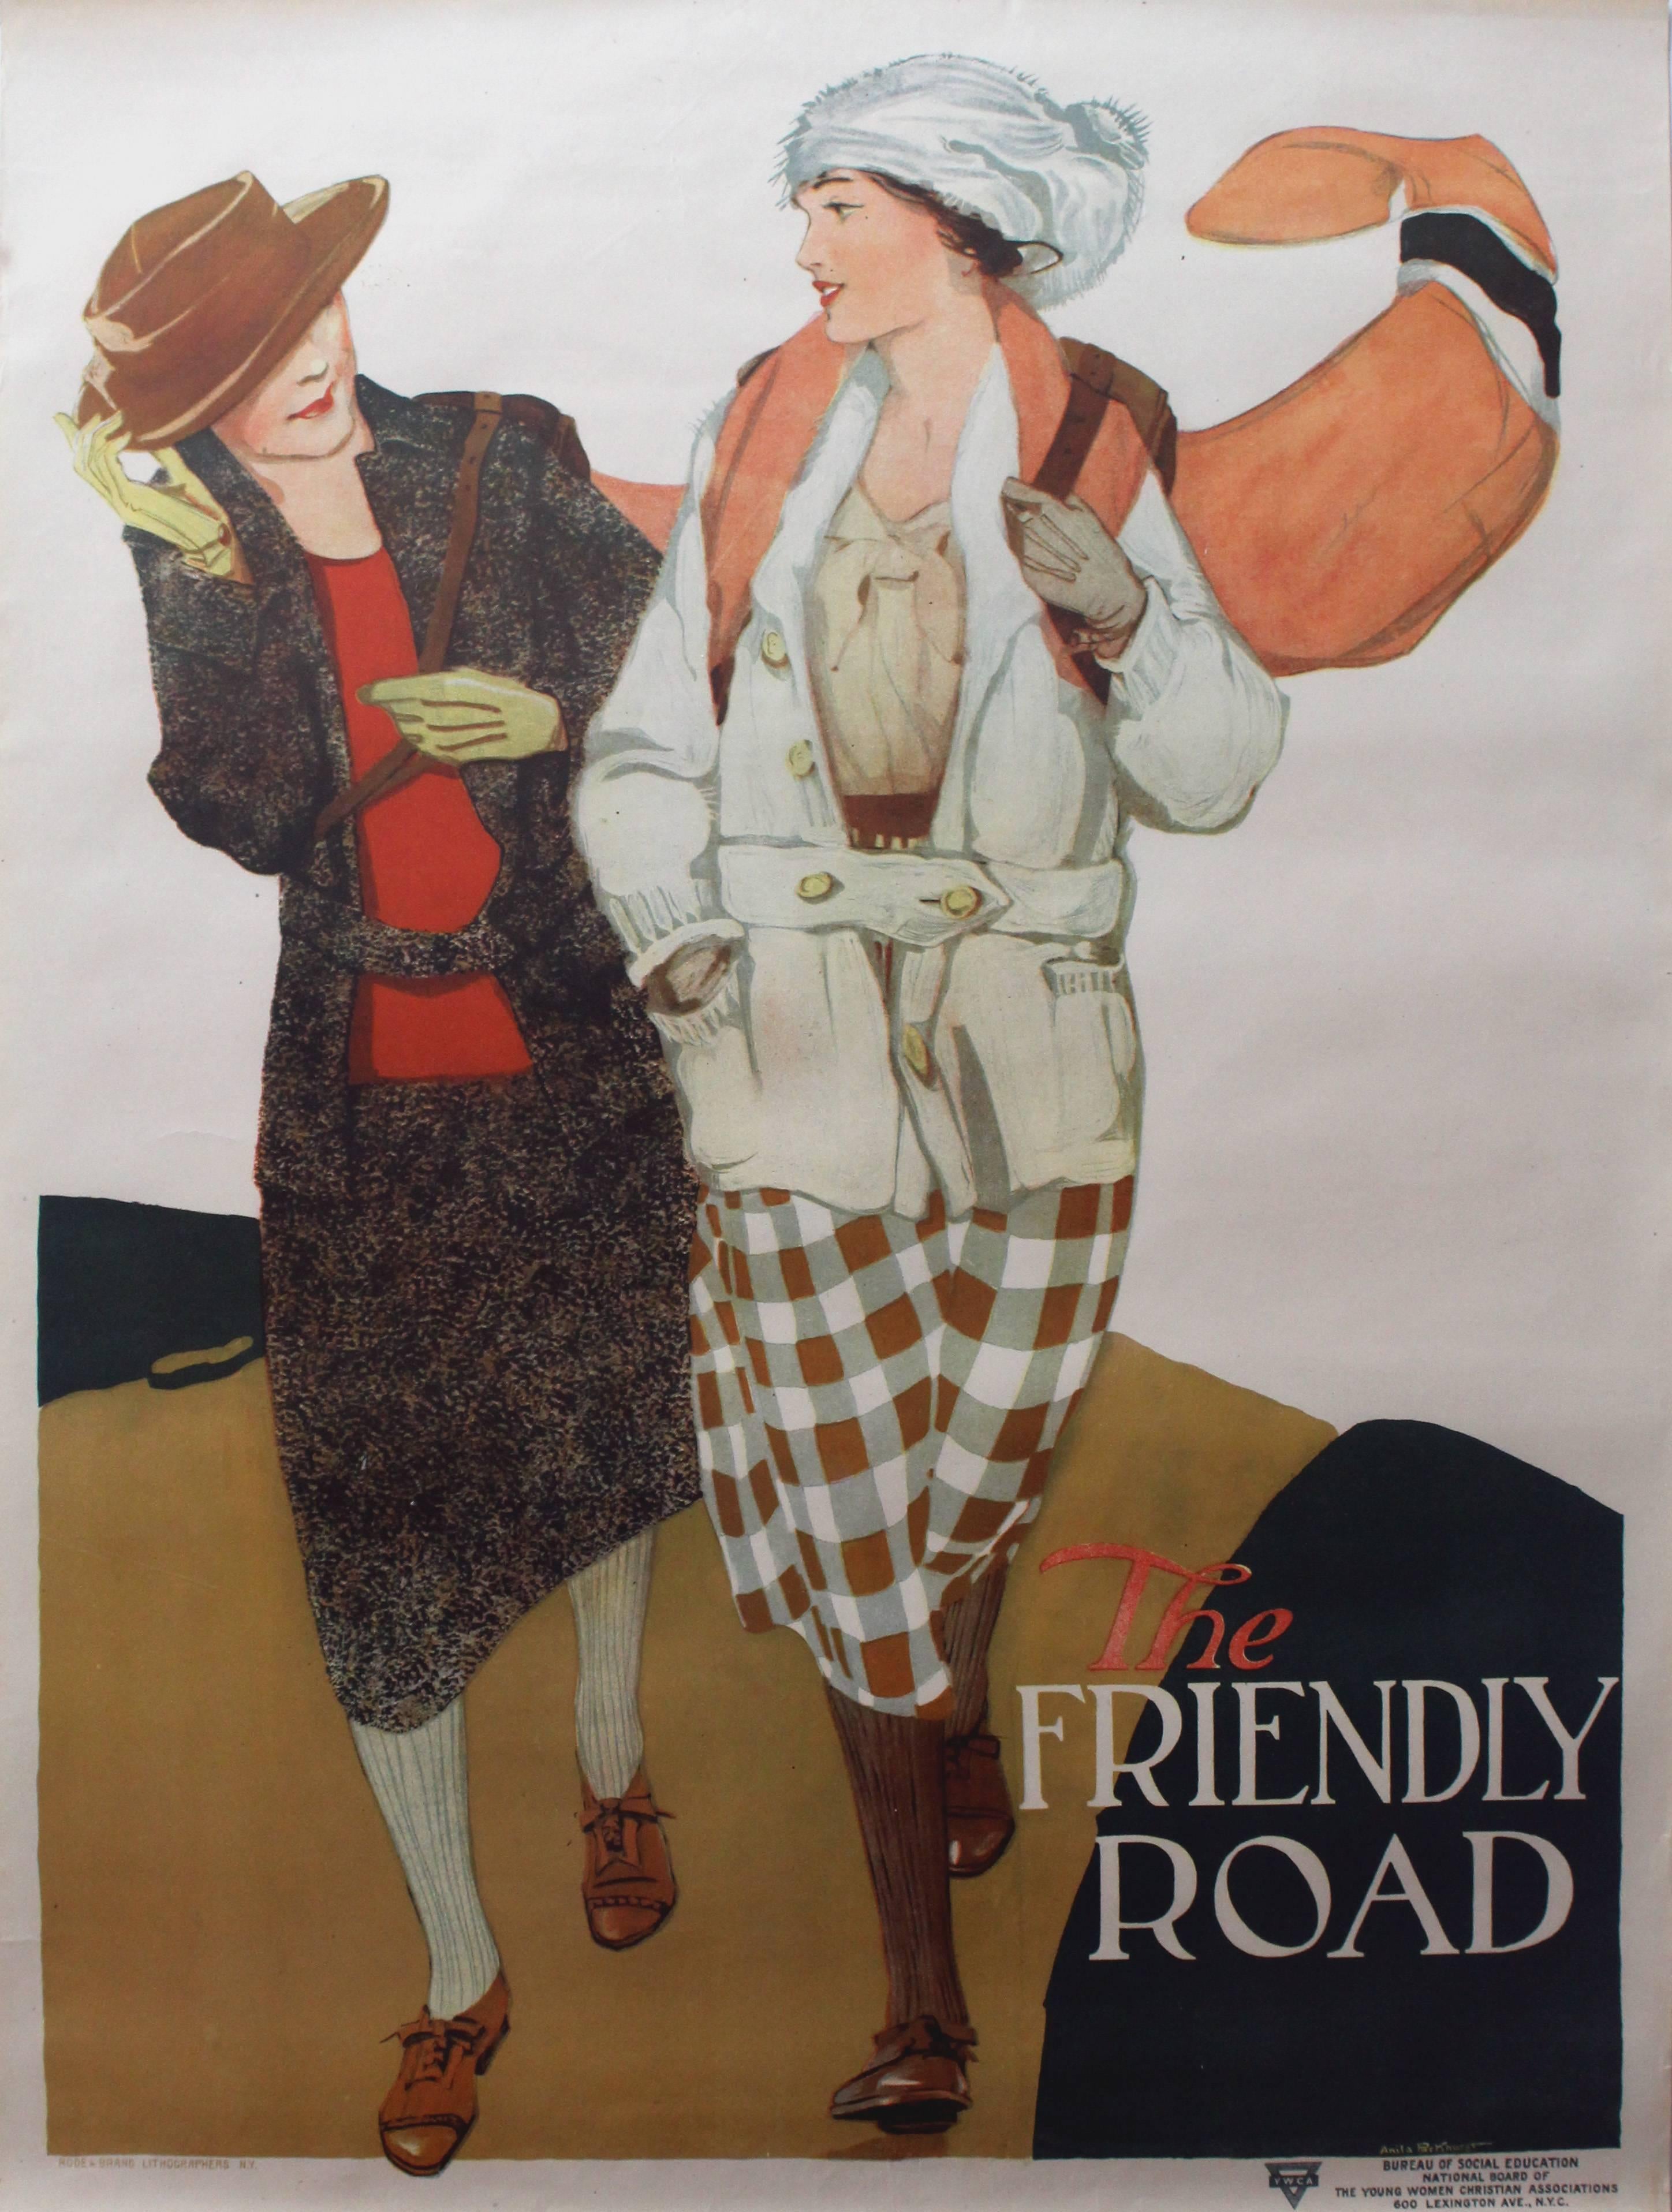 Anita Parkhurst Willcox Print - Original Vintage 1920s Poster By Anita Parkhurst - The Friendly Road - YWCA